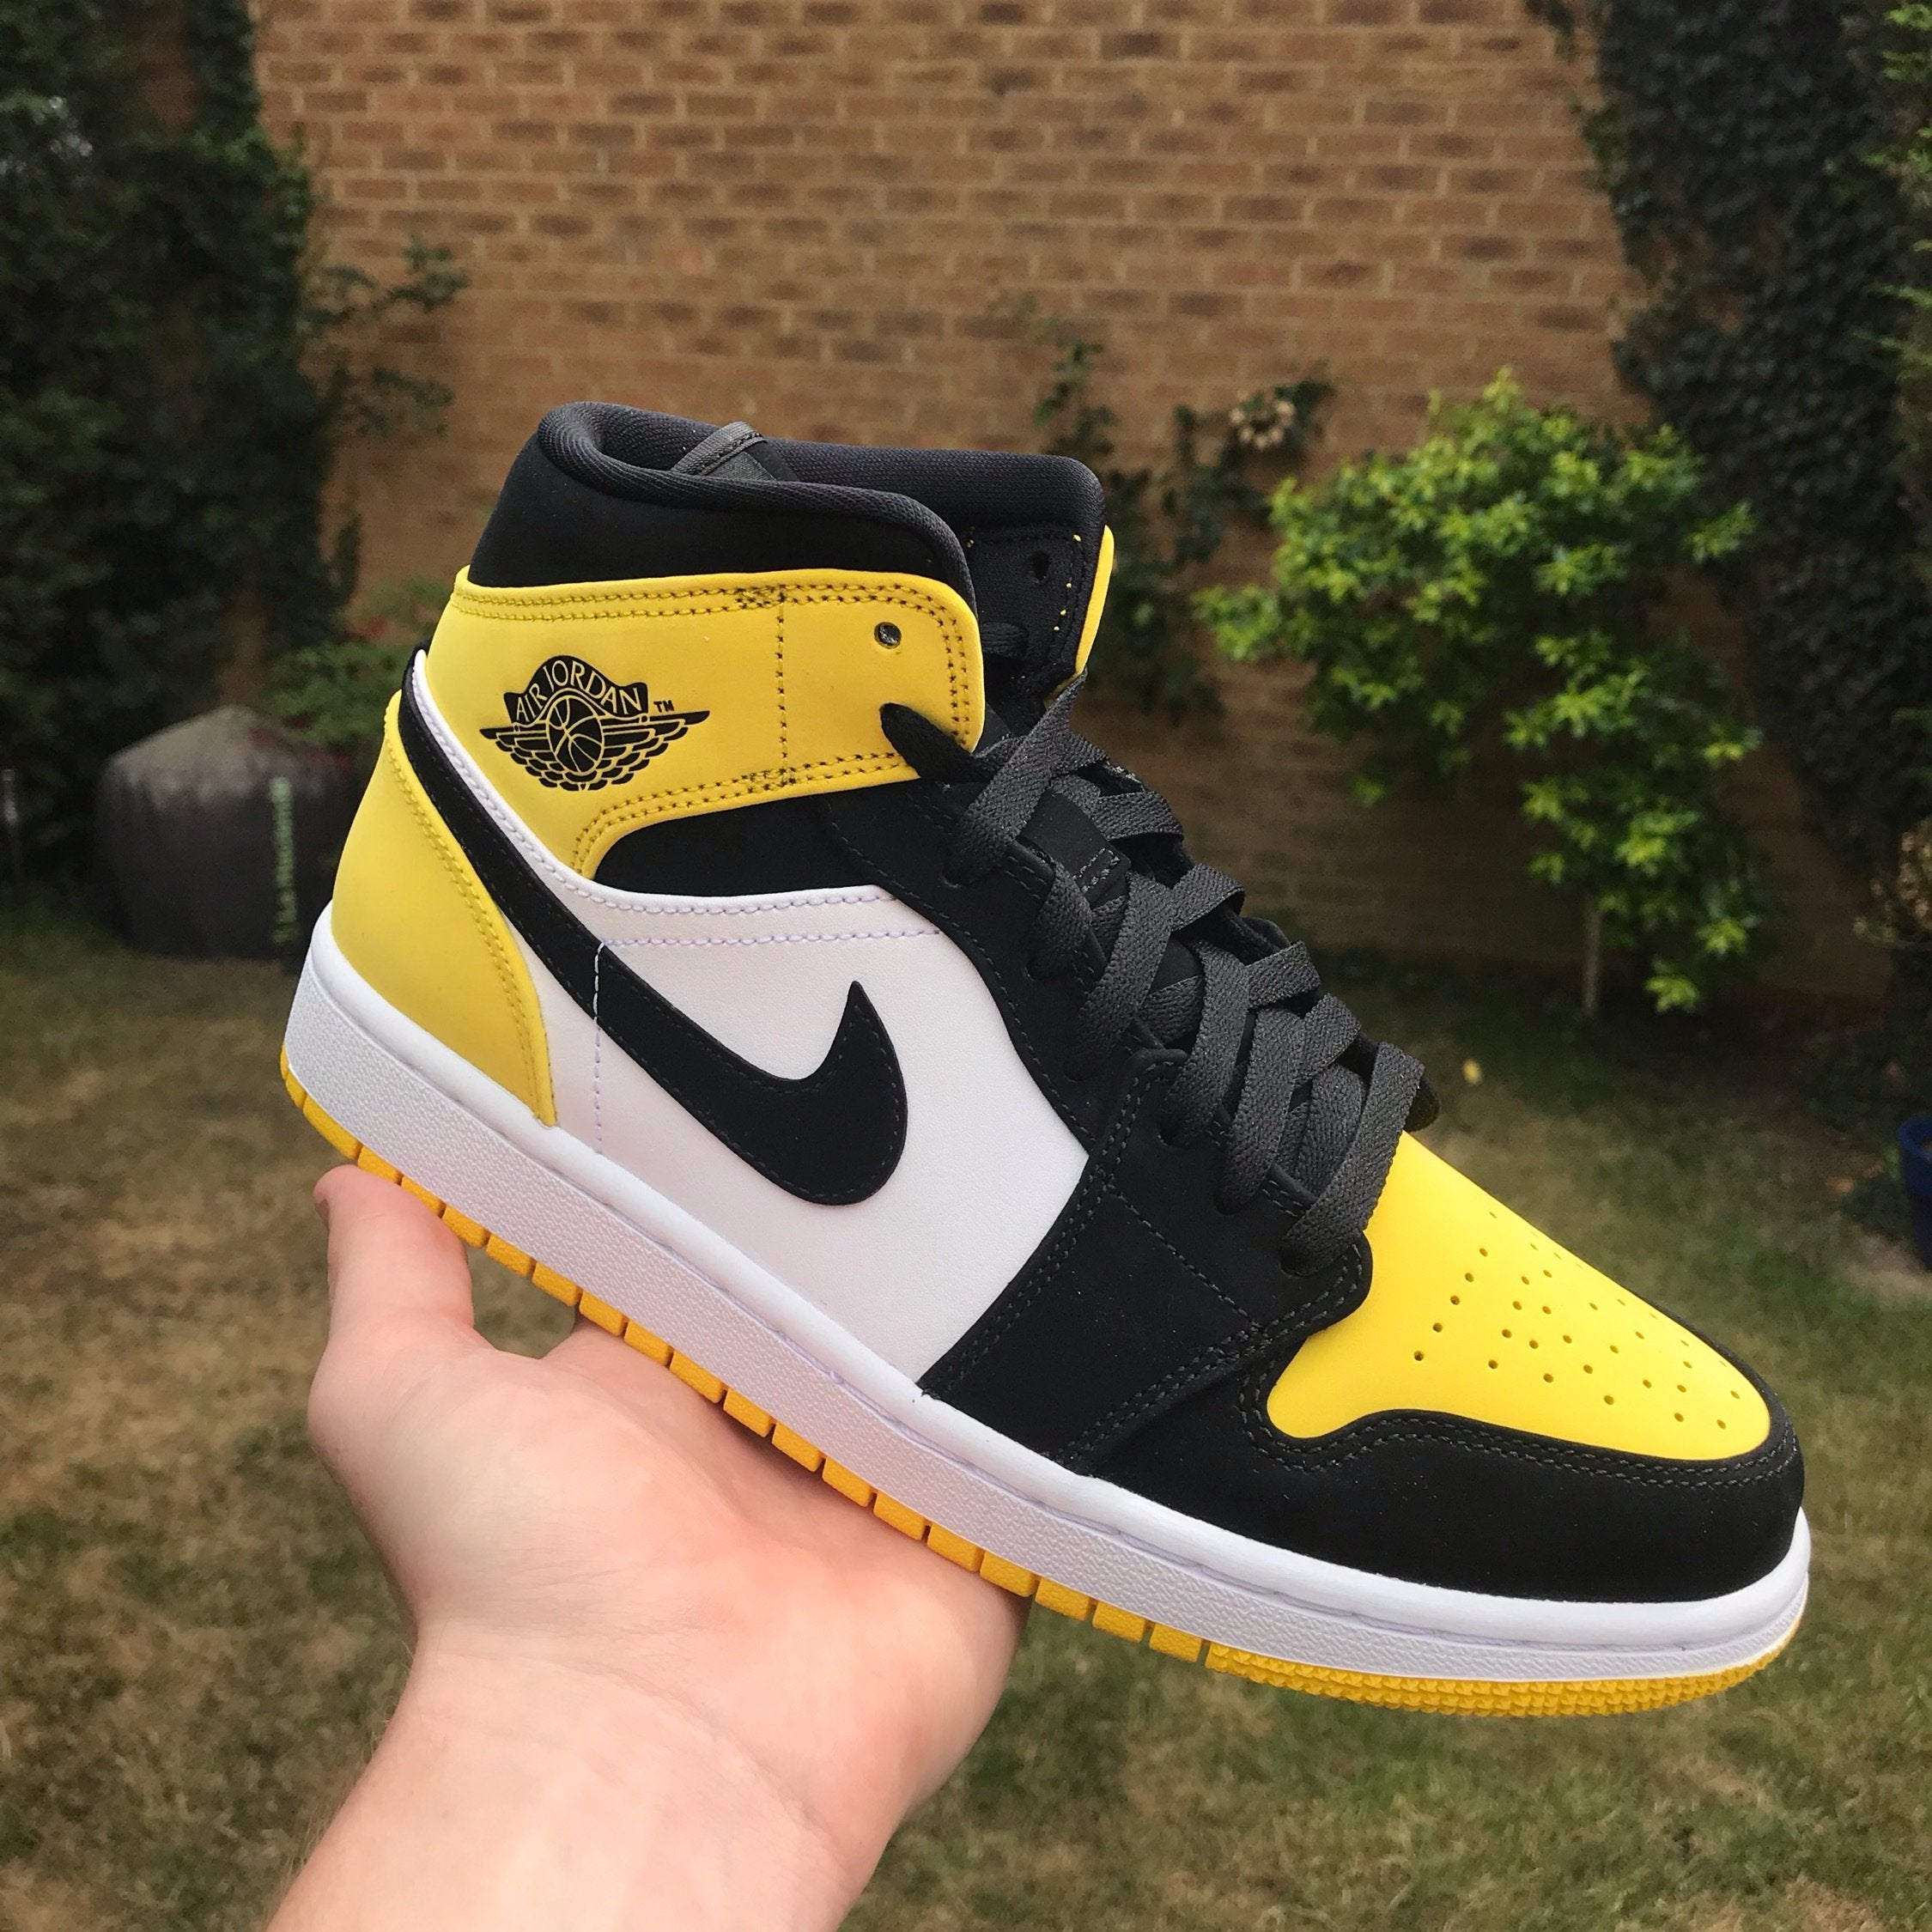 Nike Air Jordan 1 Mid Yellow Toe Black Basketball Shoes Sneakers Shoes